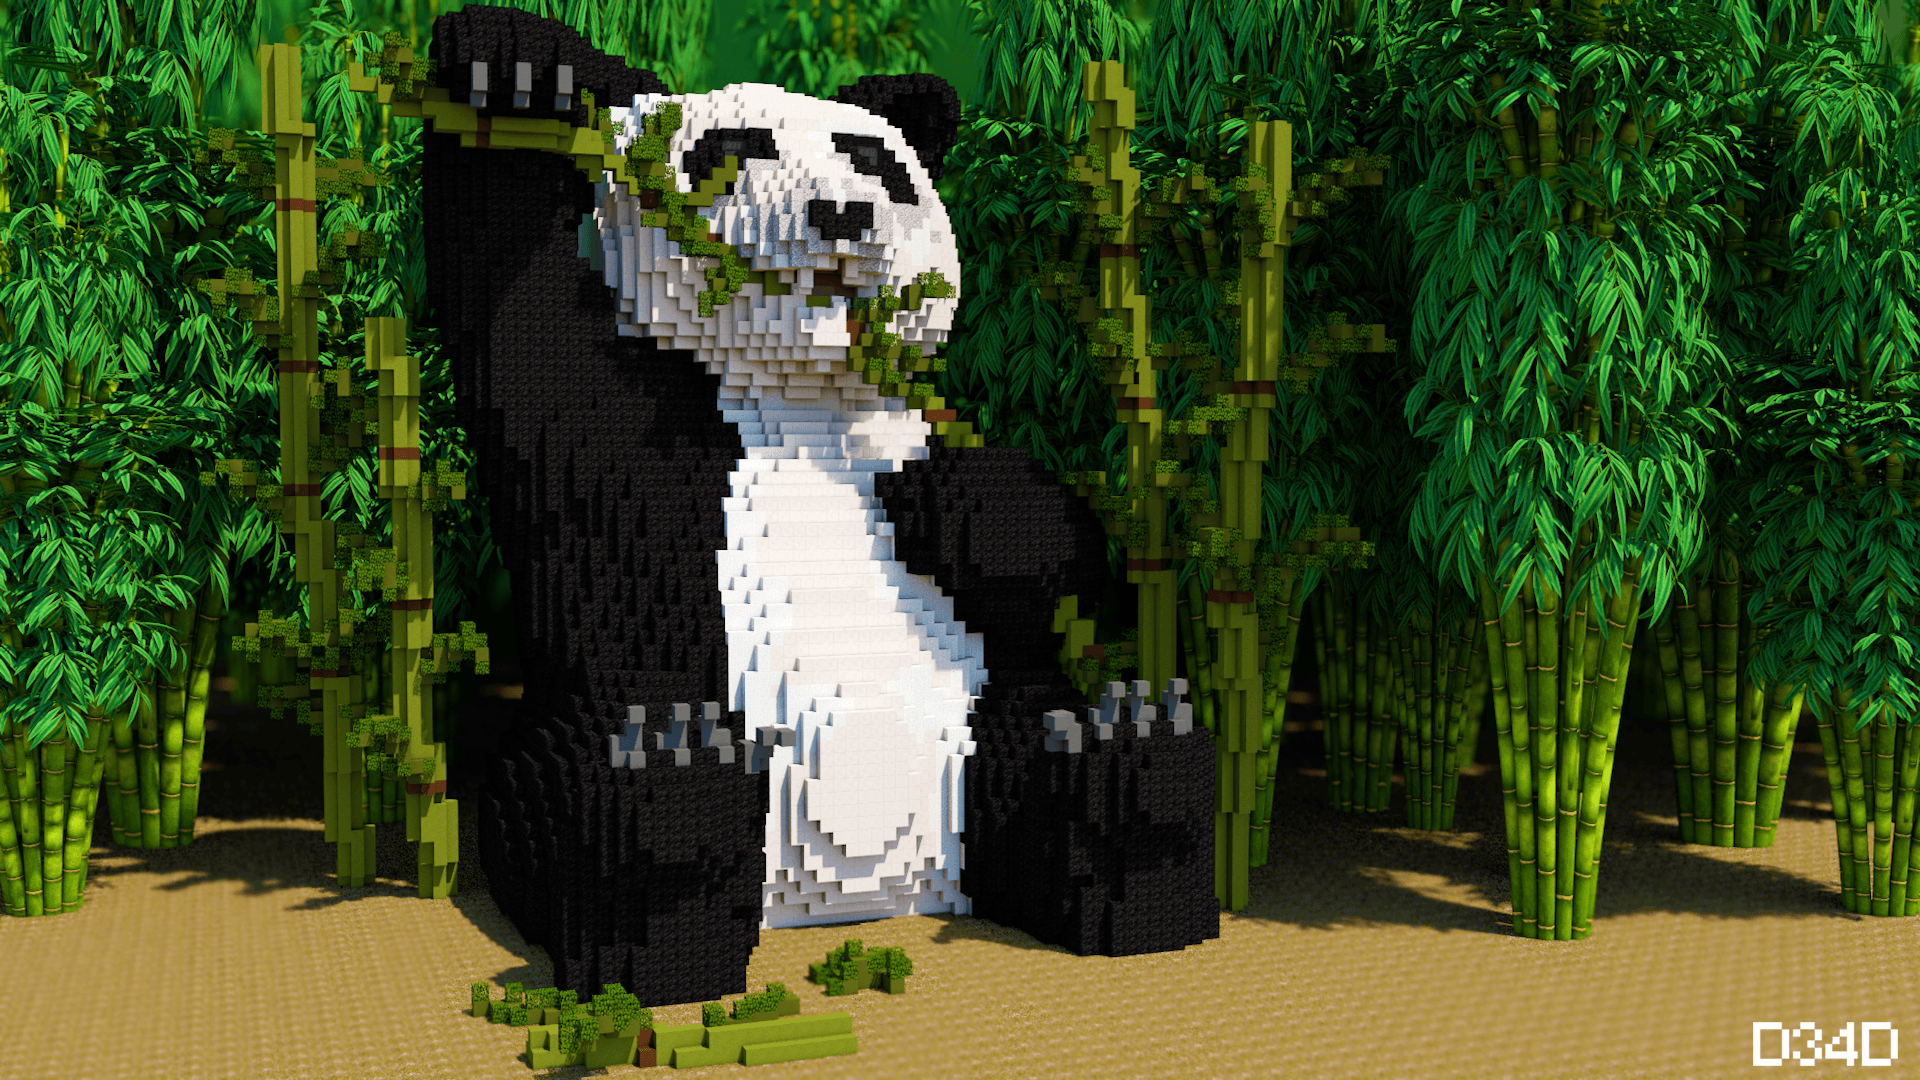 Made a panda in Minecraft. ^-^